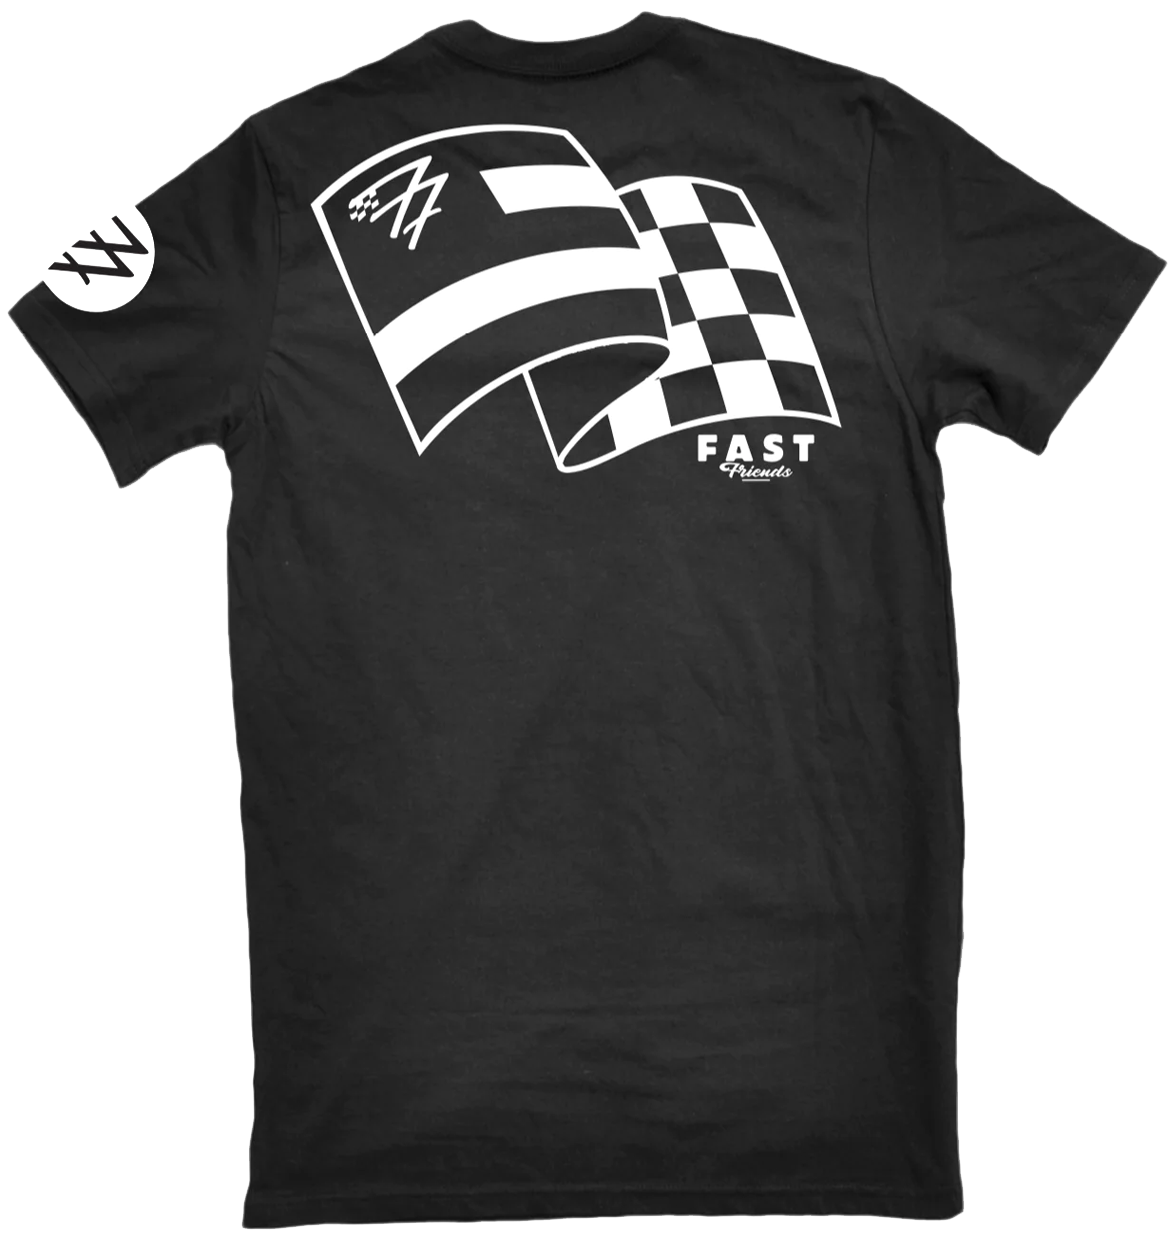 Fast is Fun Shirt